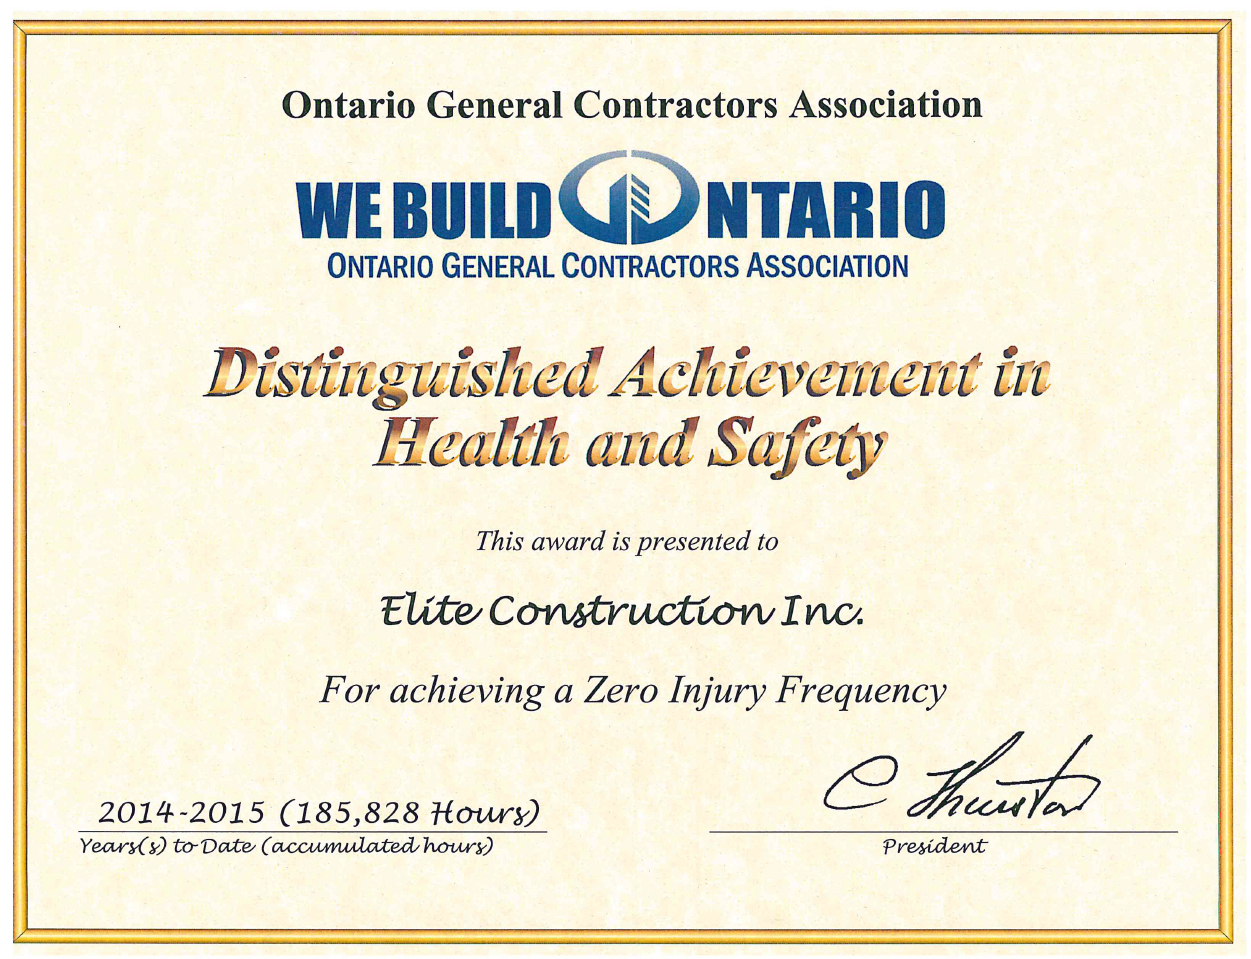 OGCA 2015 Safety Achievement Award